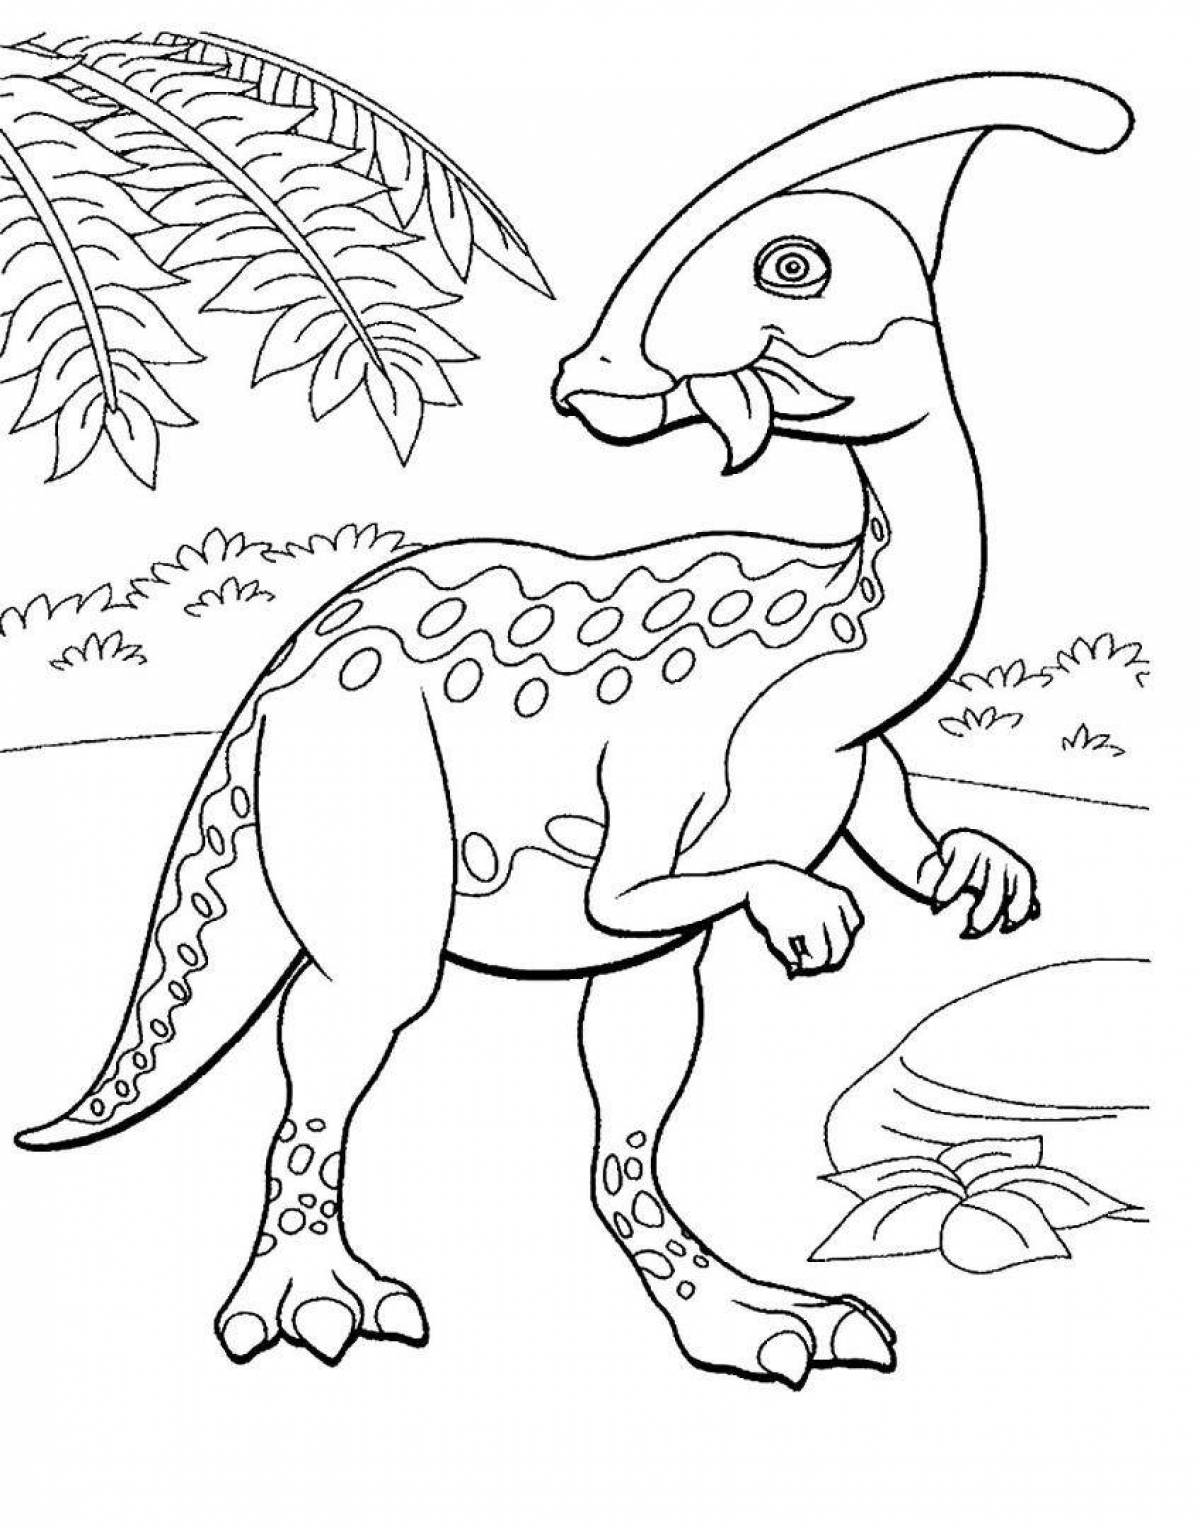 Coloring page bizarre parasaurolophus